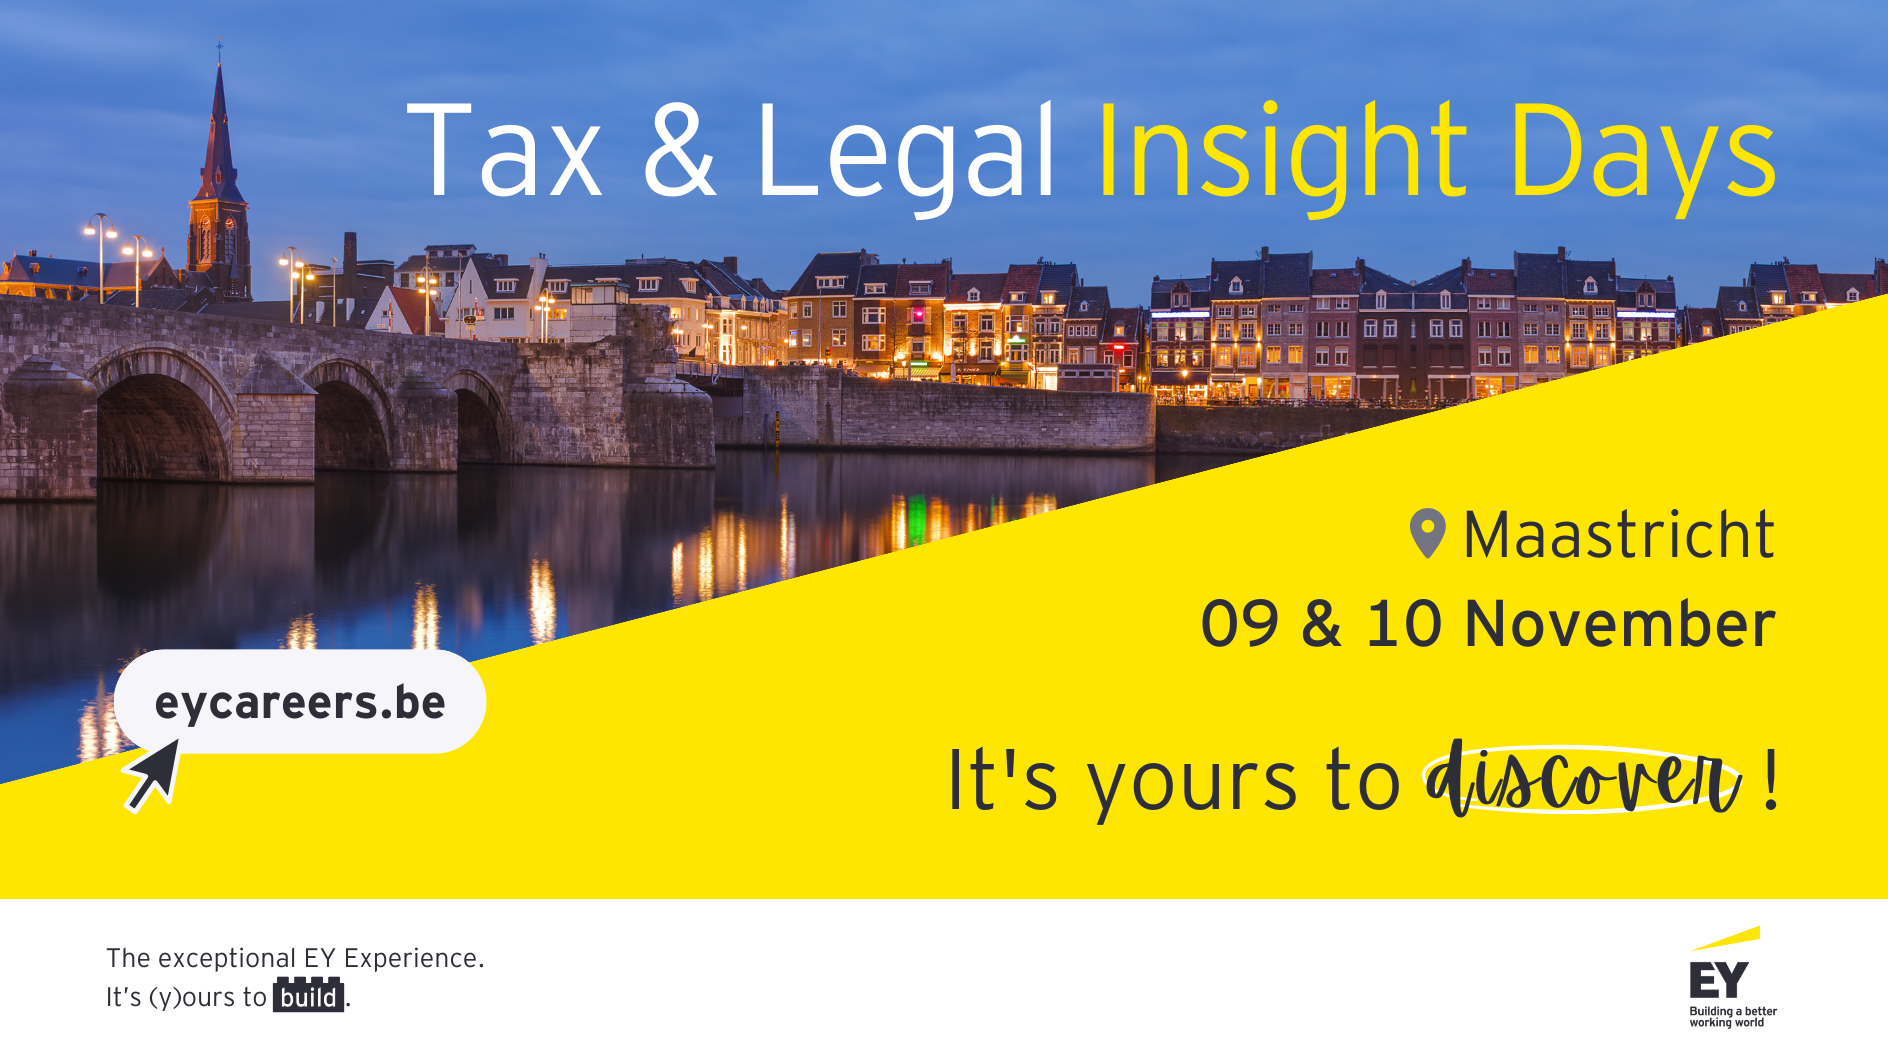 ey-tax-legal-insight-days